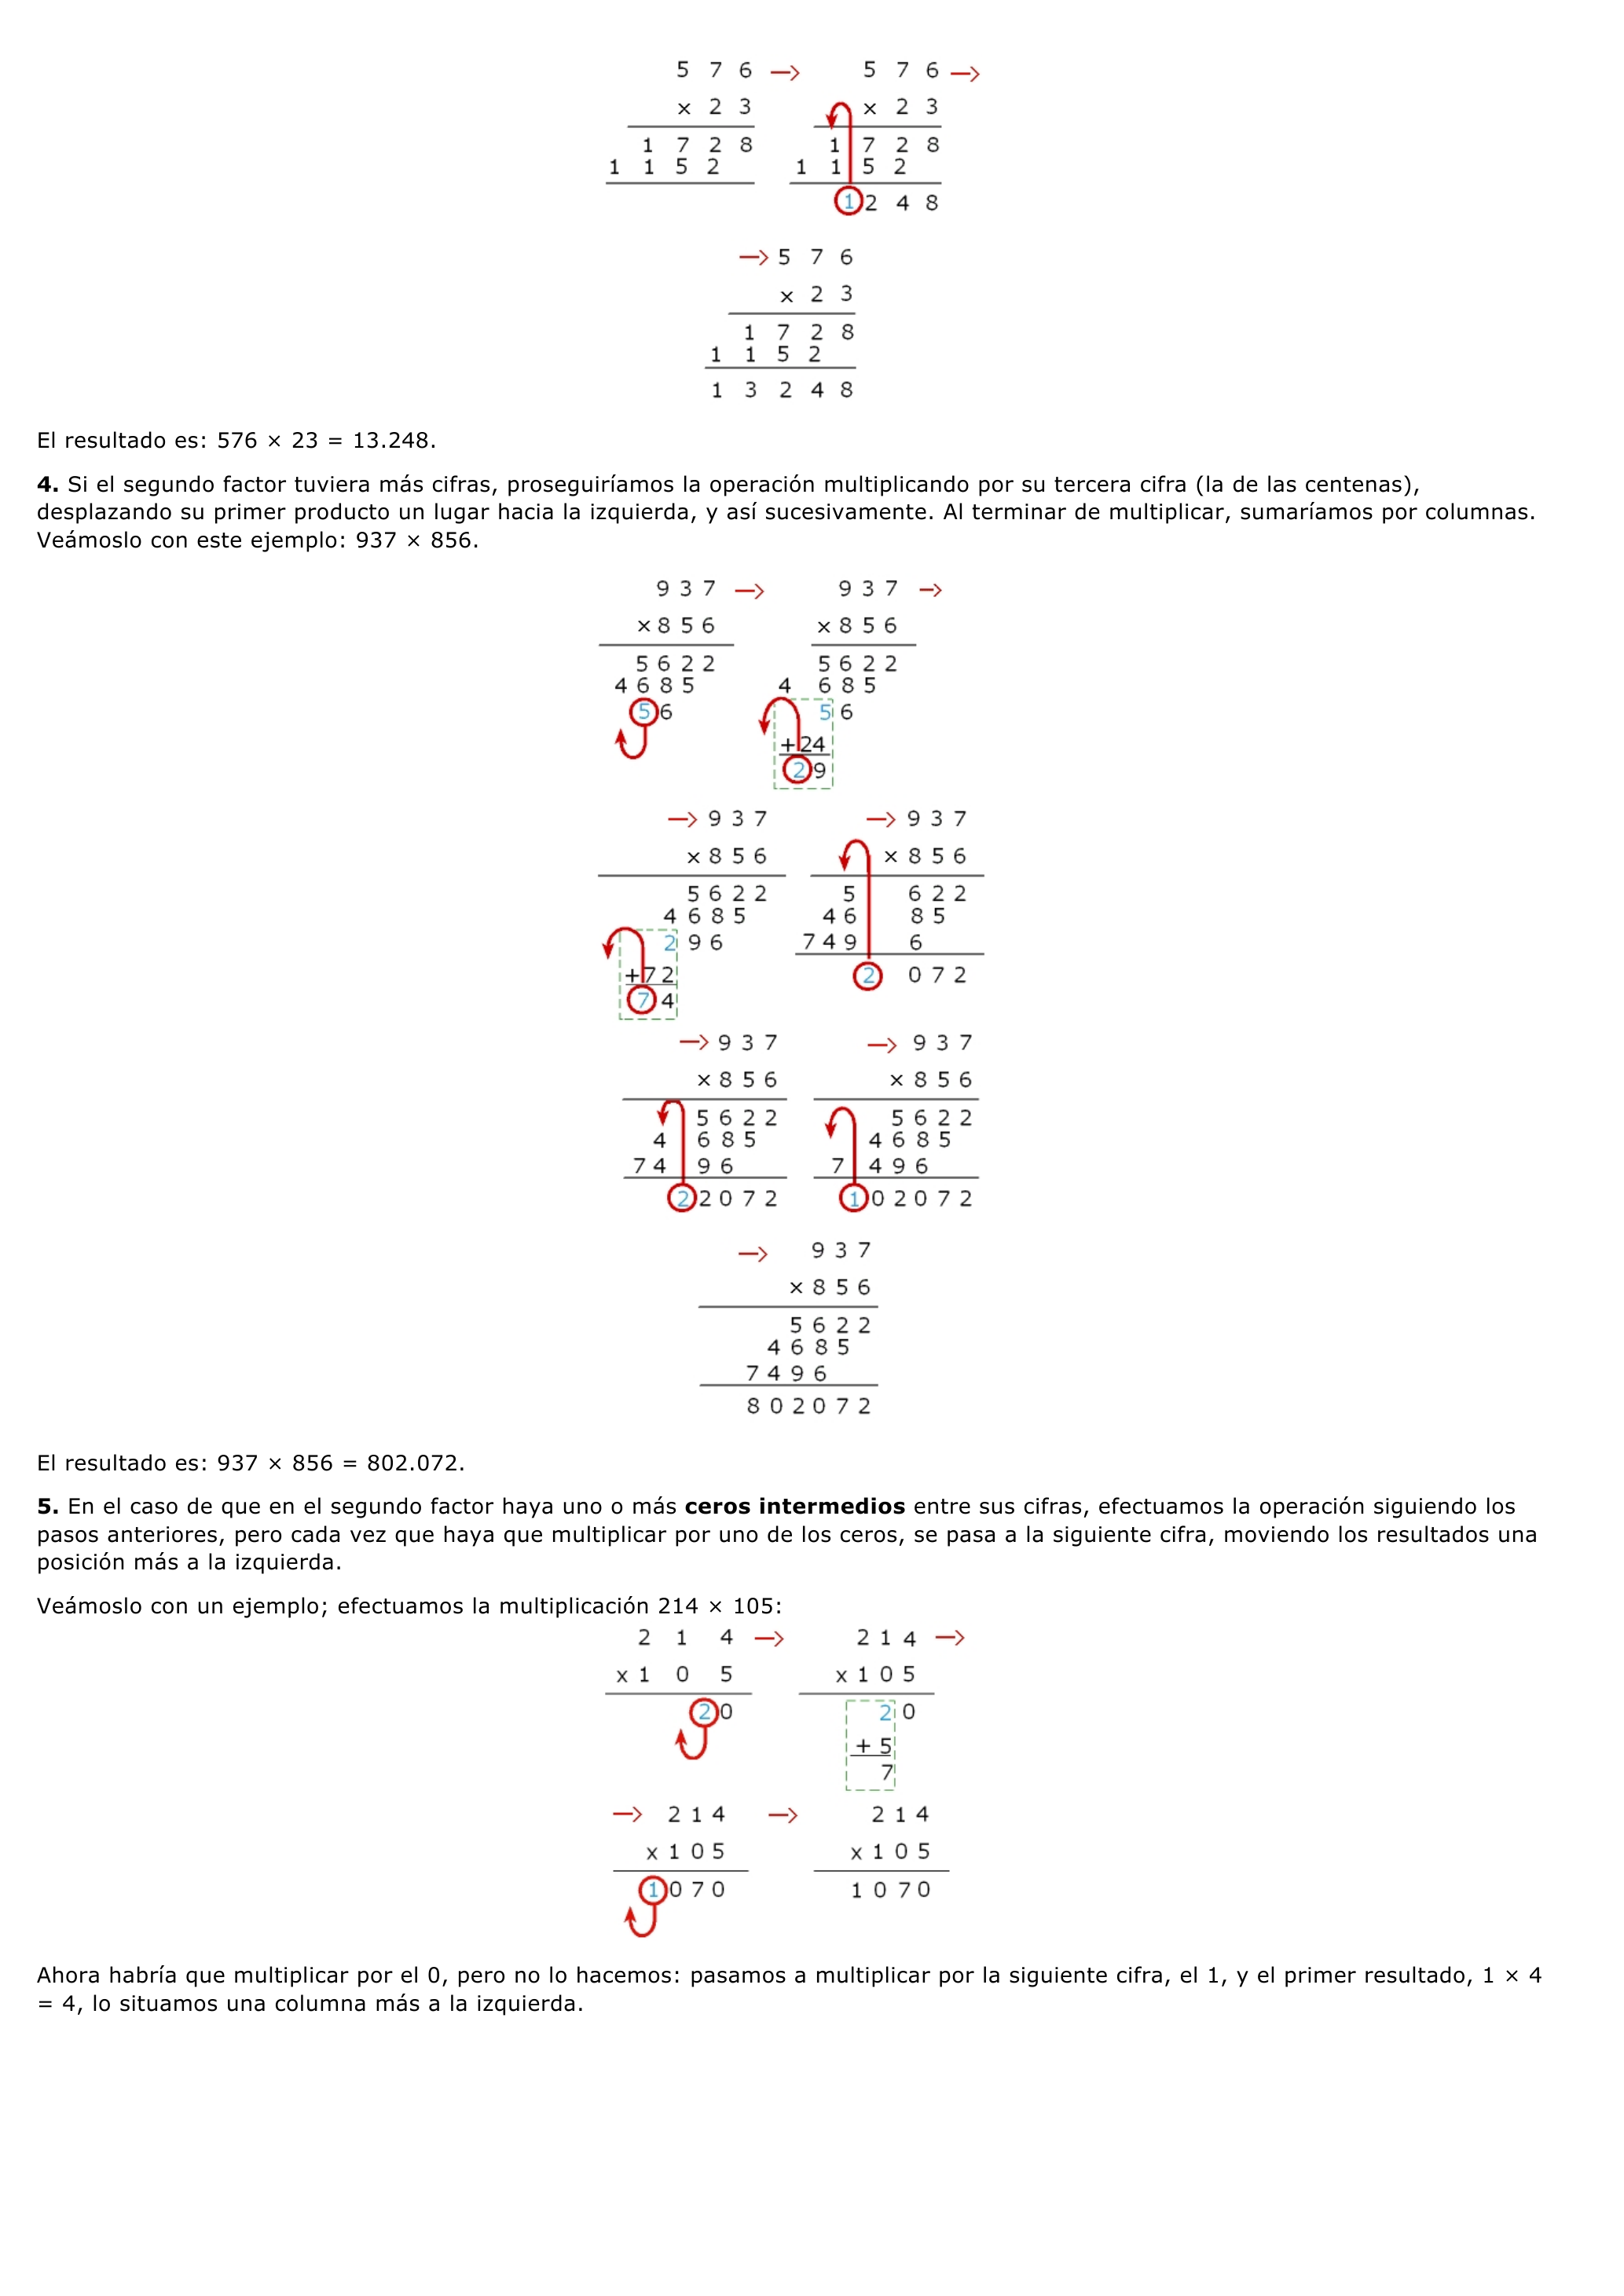 Prévisualisation du document La multiplicación - (espagnol - collège).